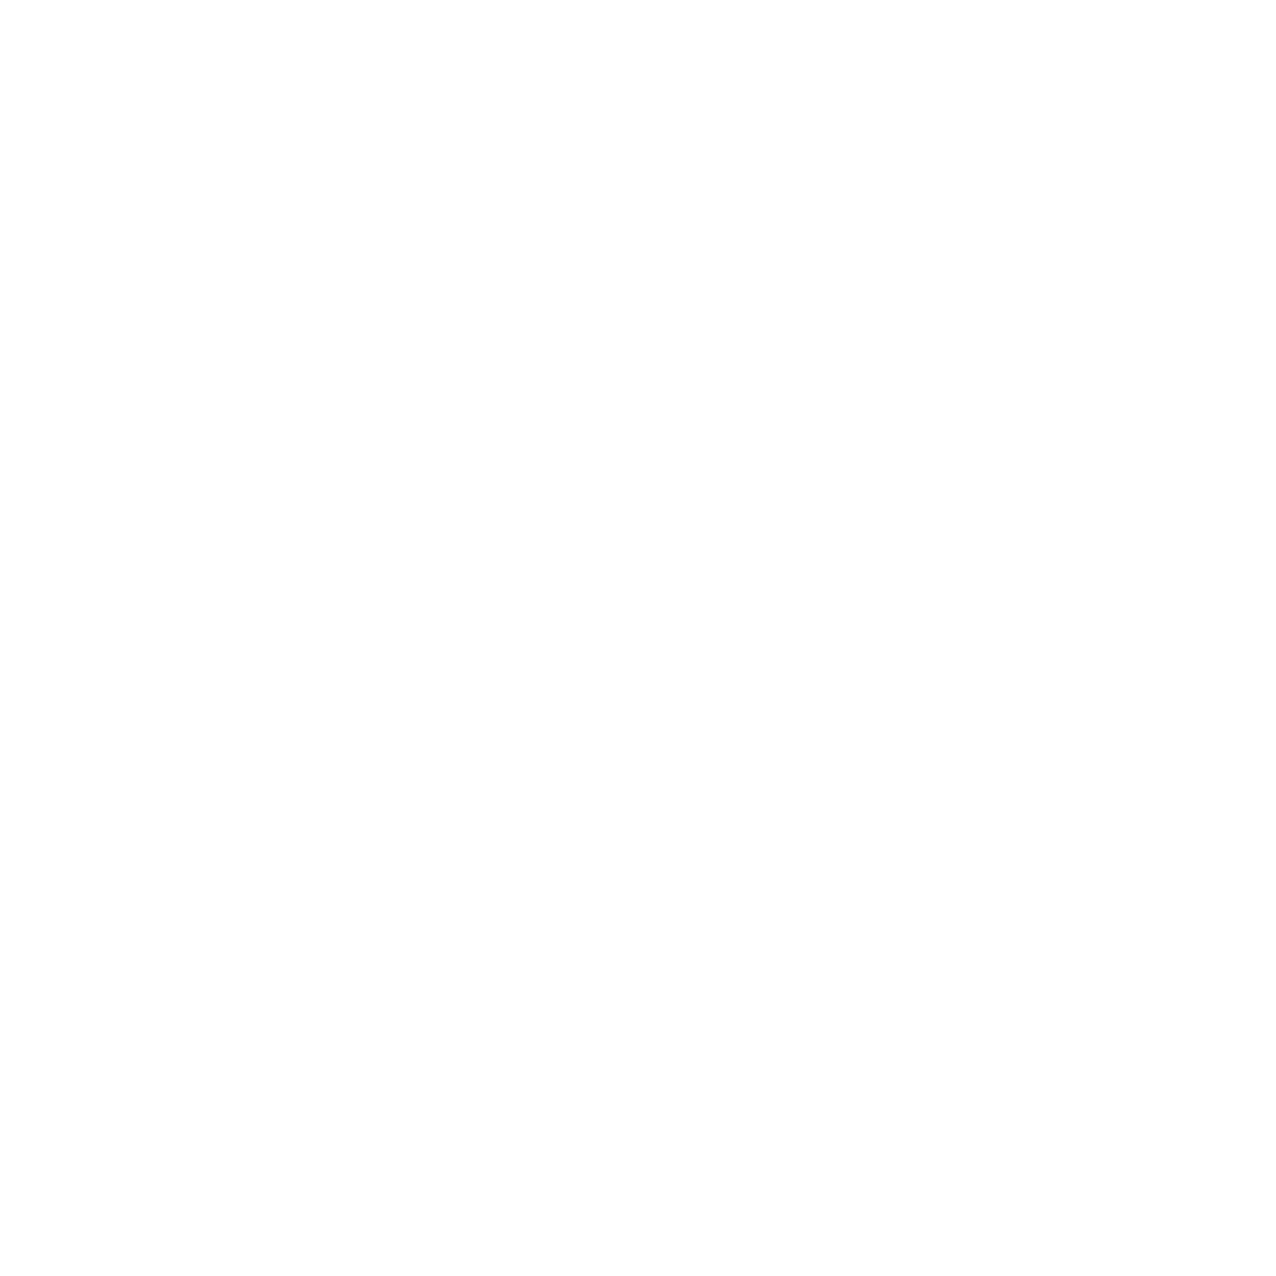 NOMAD COFFEE